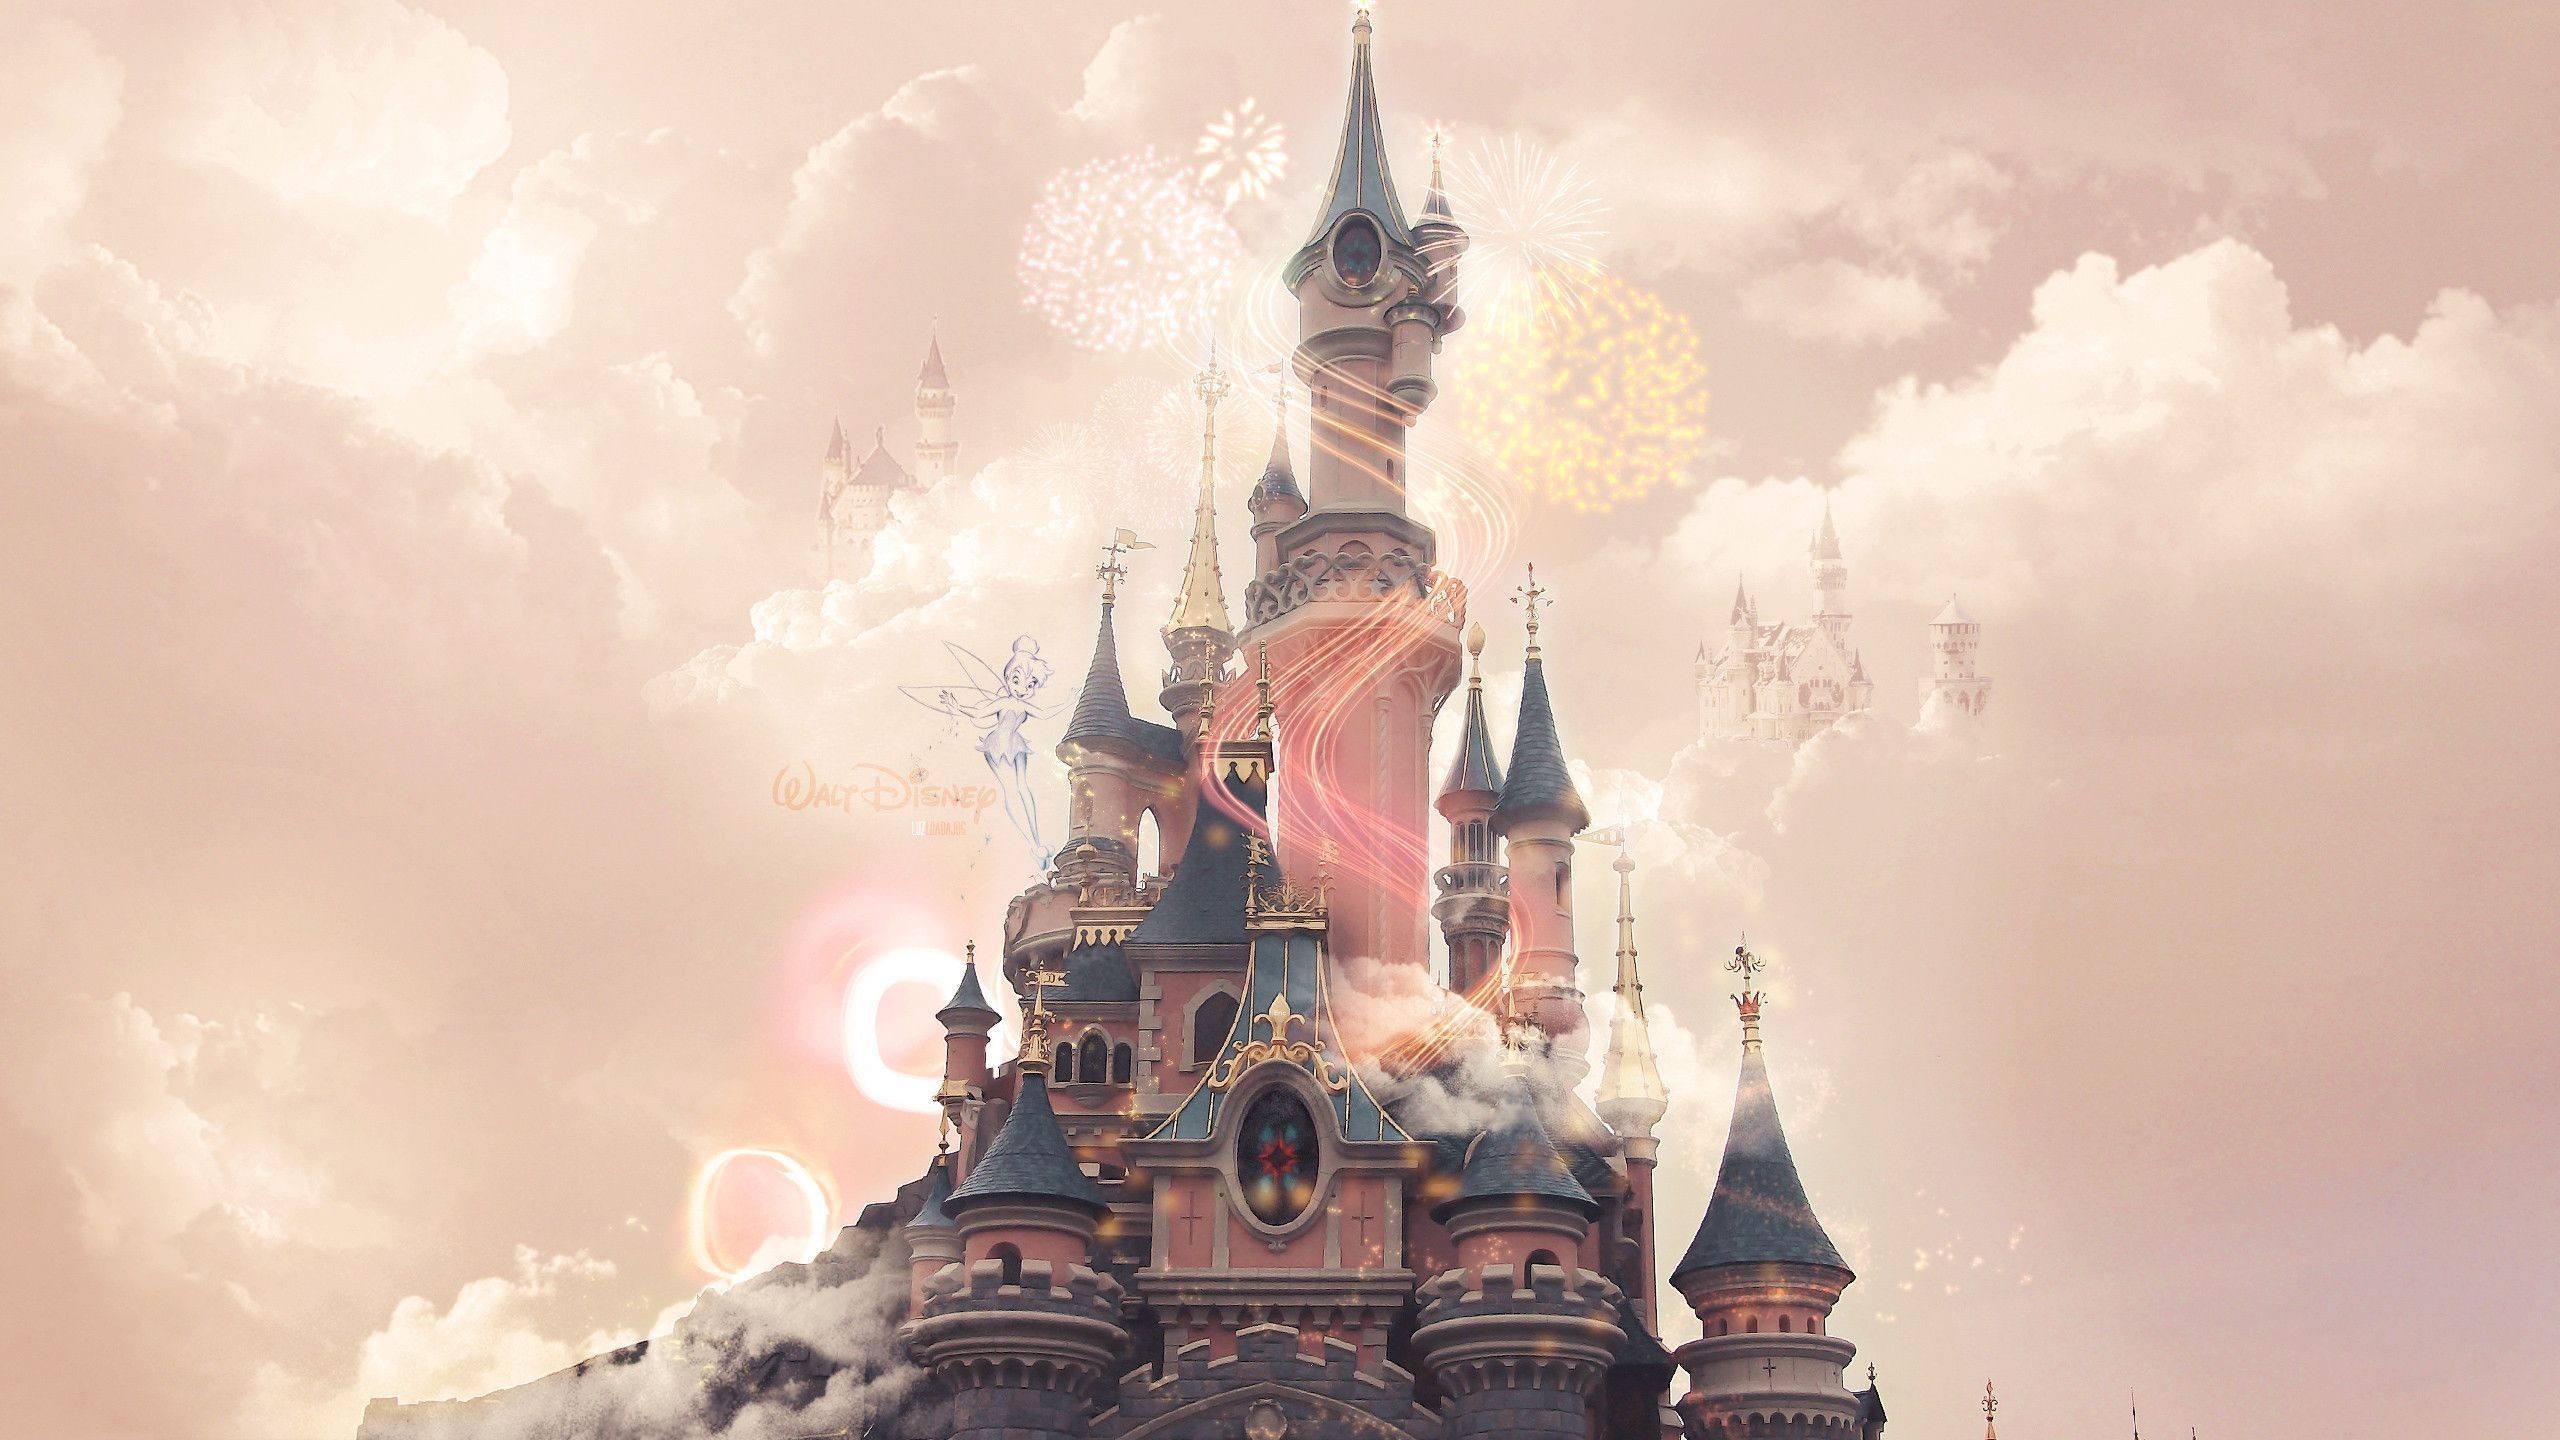 2560x1440 Disney castle background hd download.